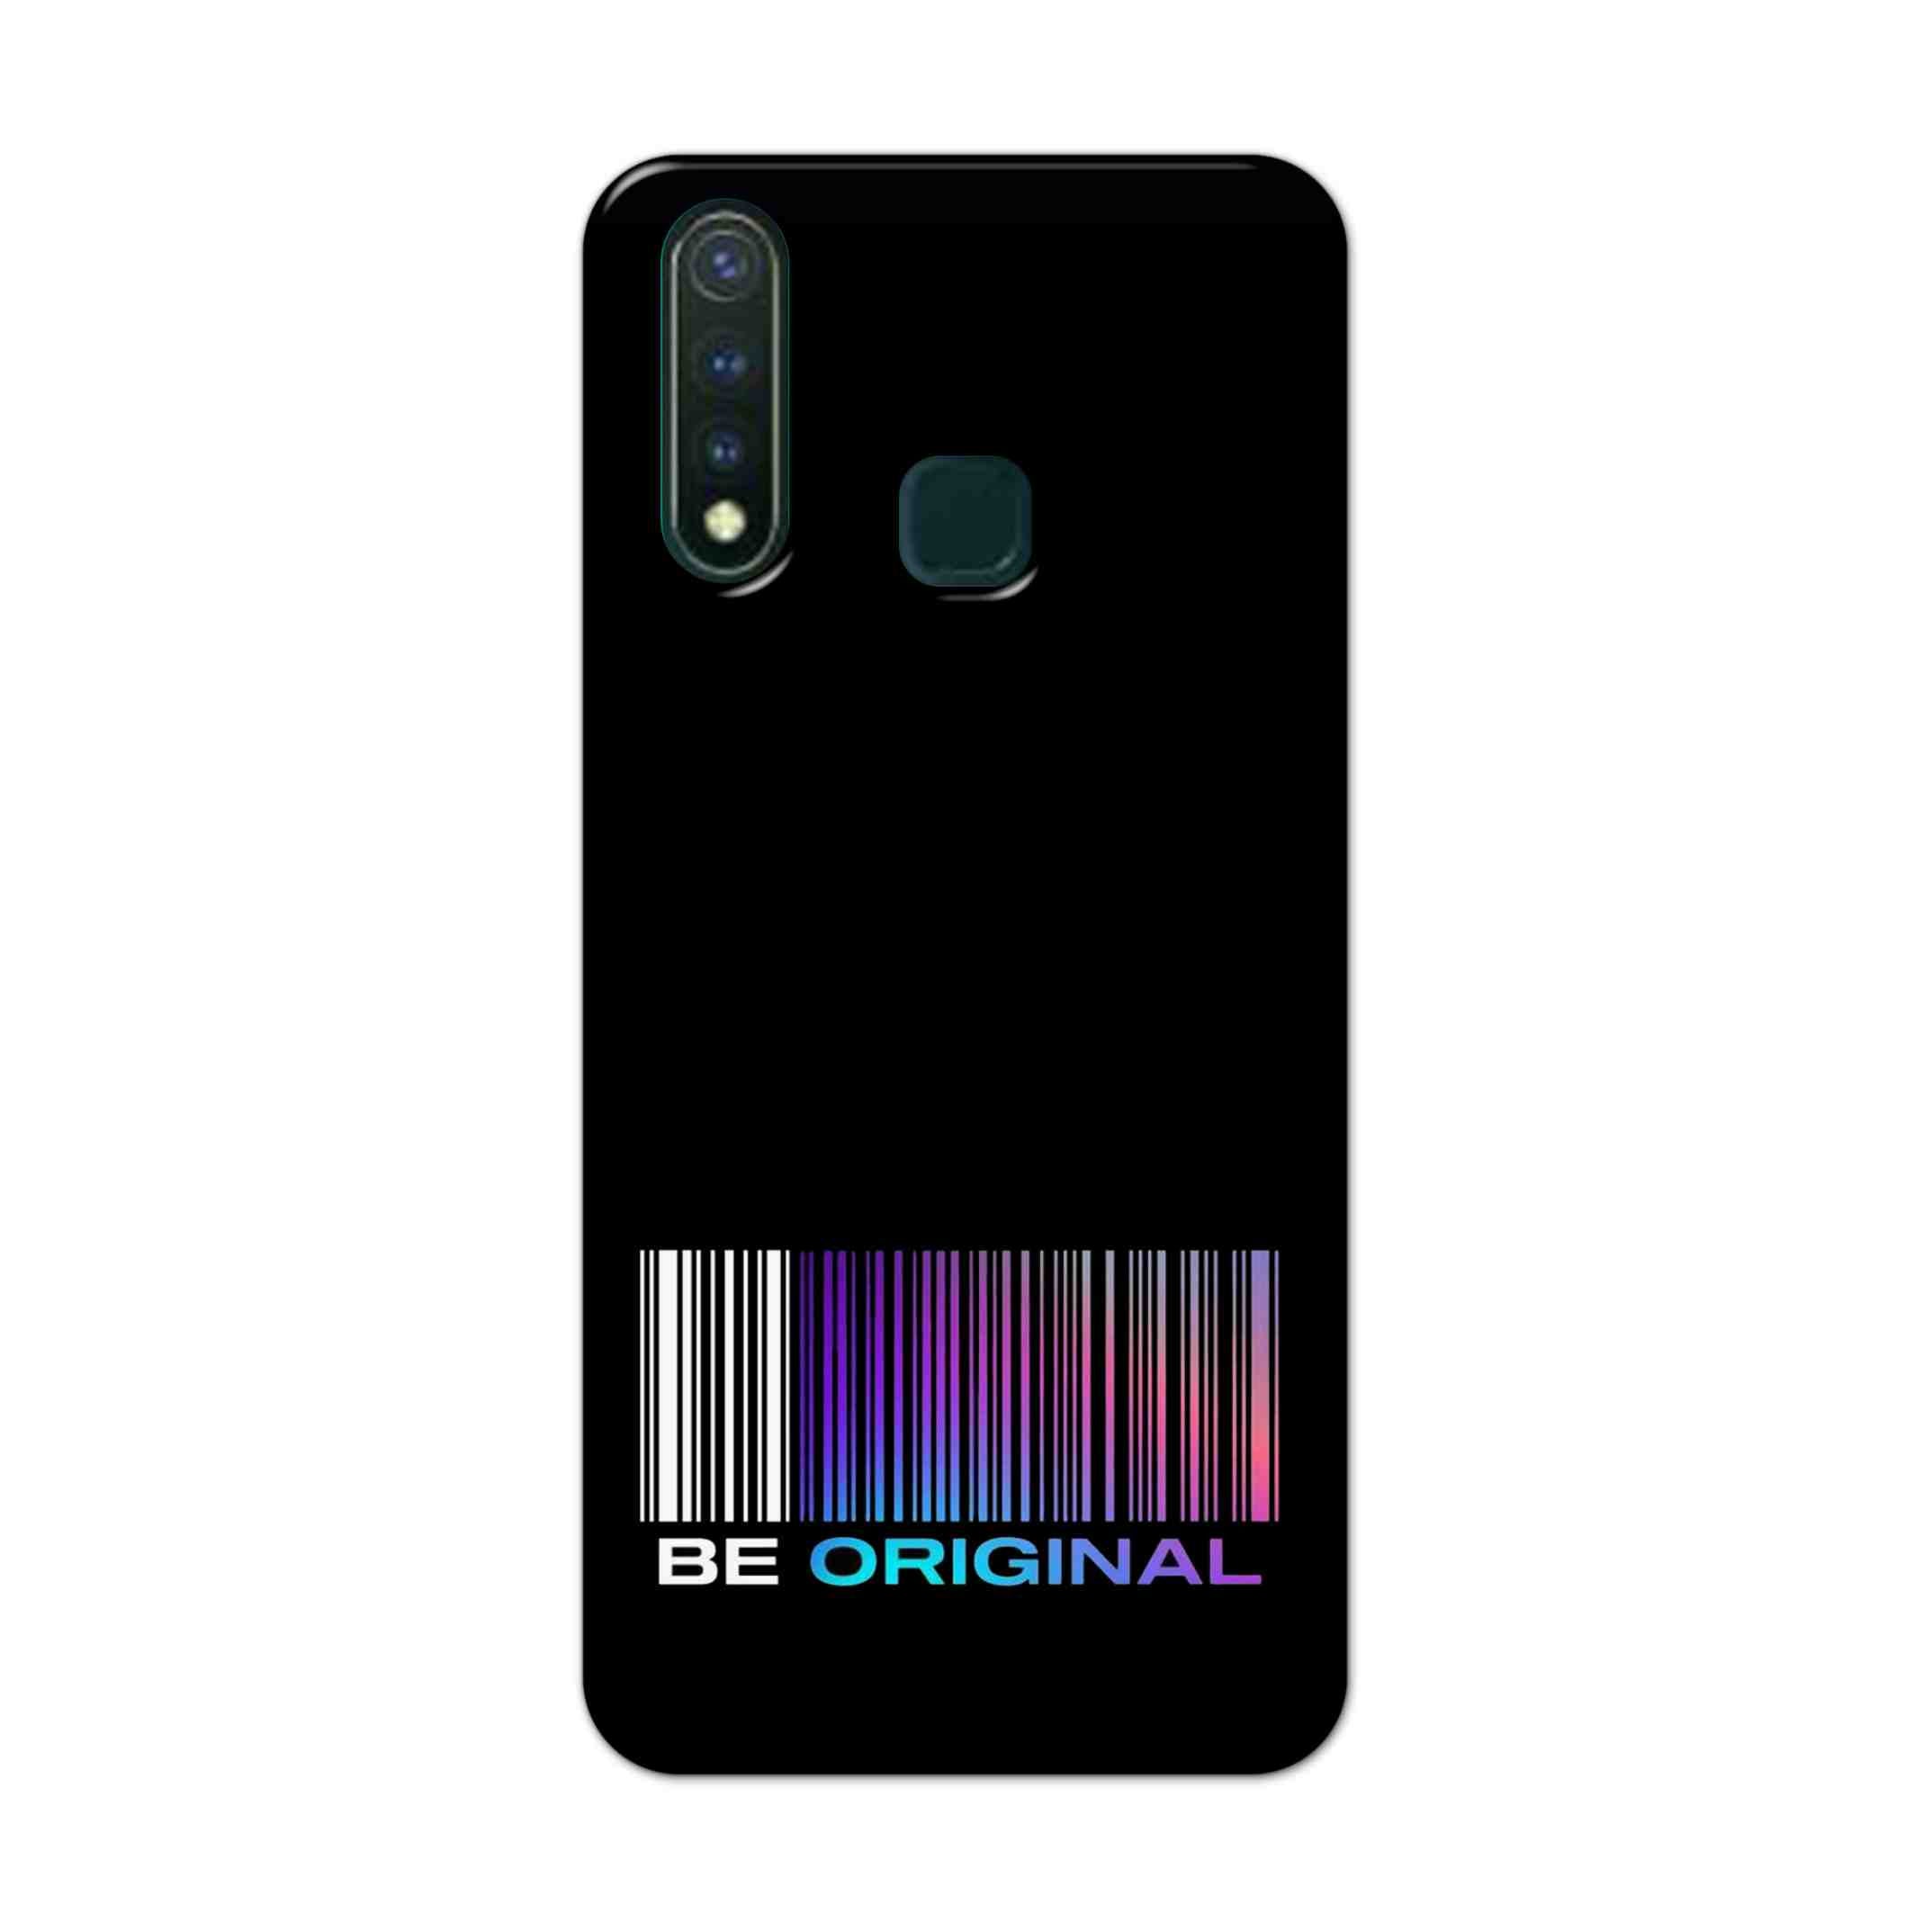 Buy Be Original Hard Back Mobile Phone Case Cover For Vivo Y19 Online